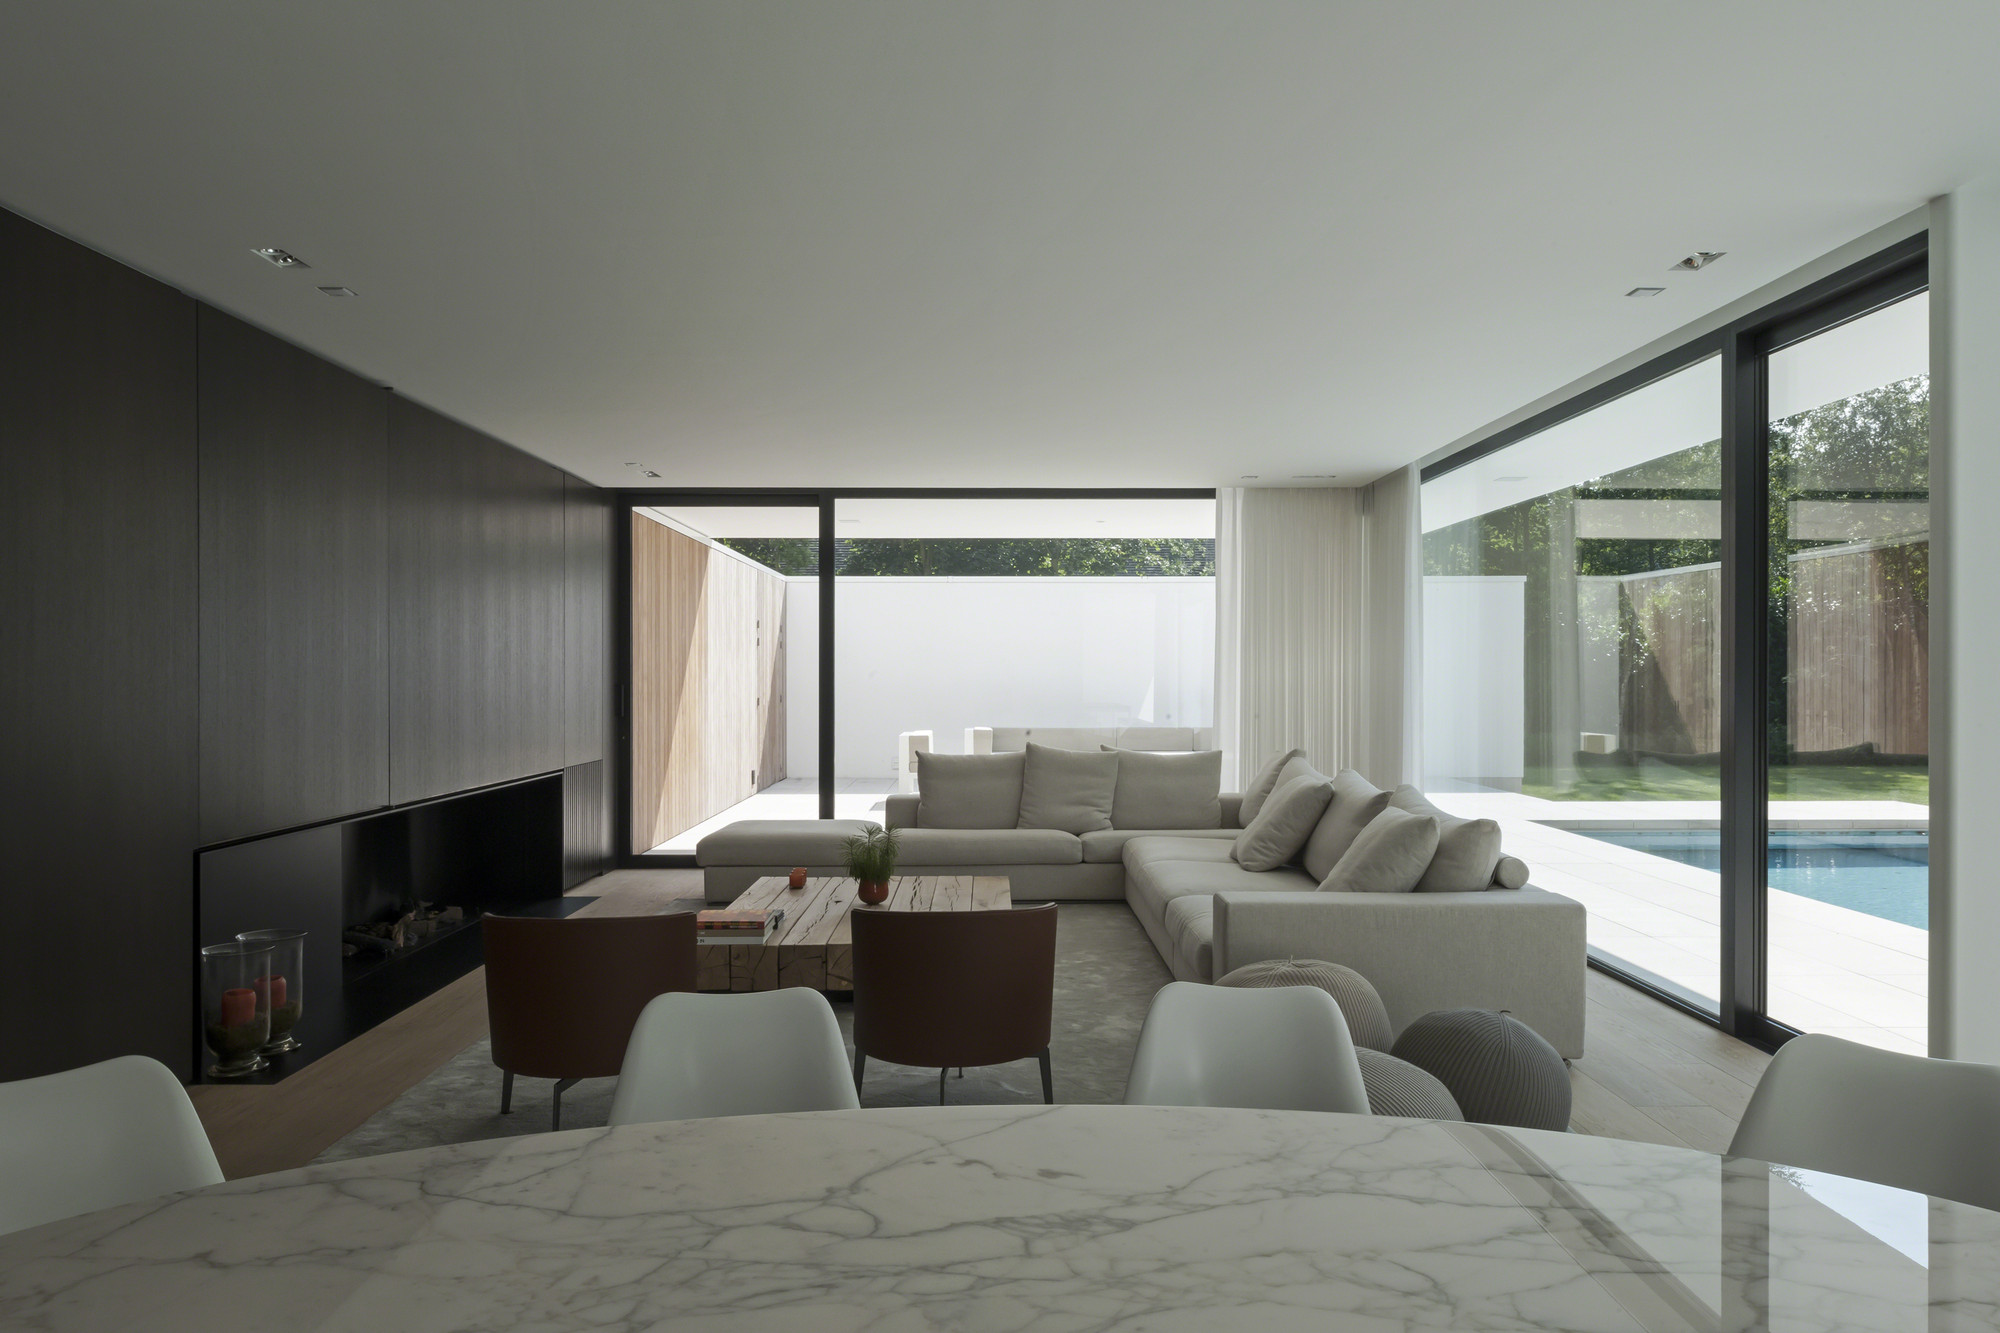 General 2000x1333 house interior interior design living rooms modern